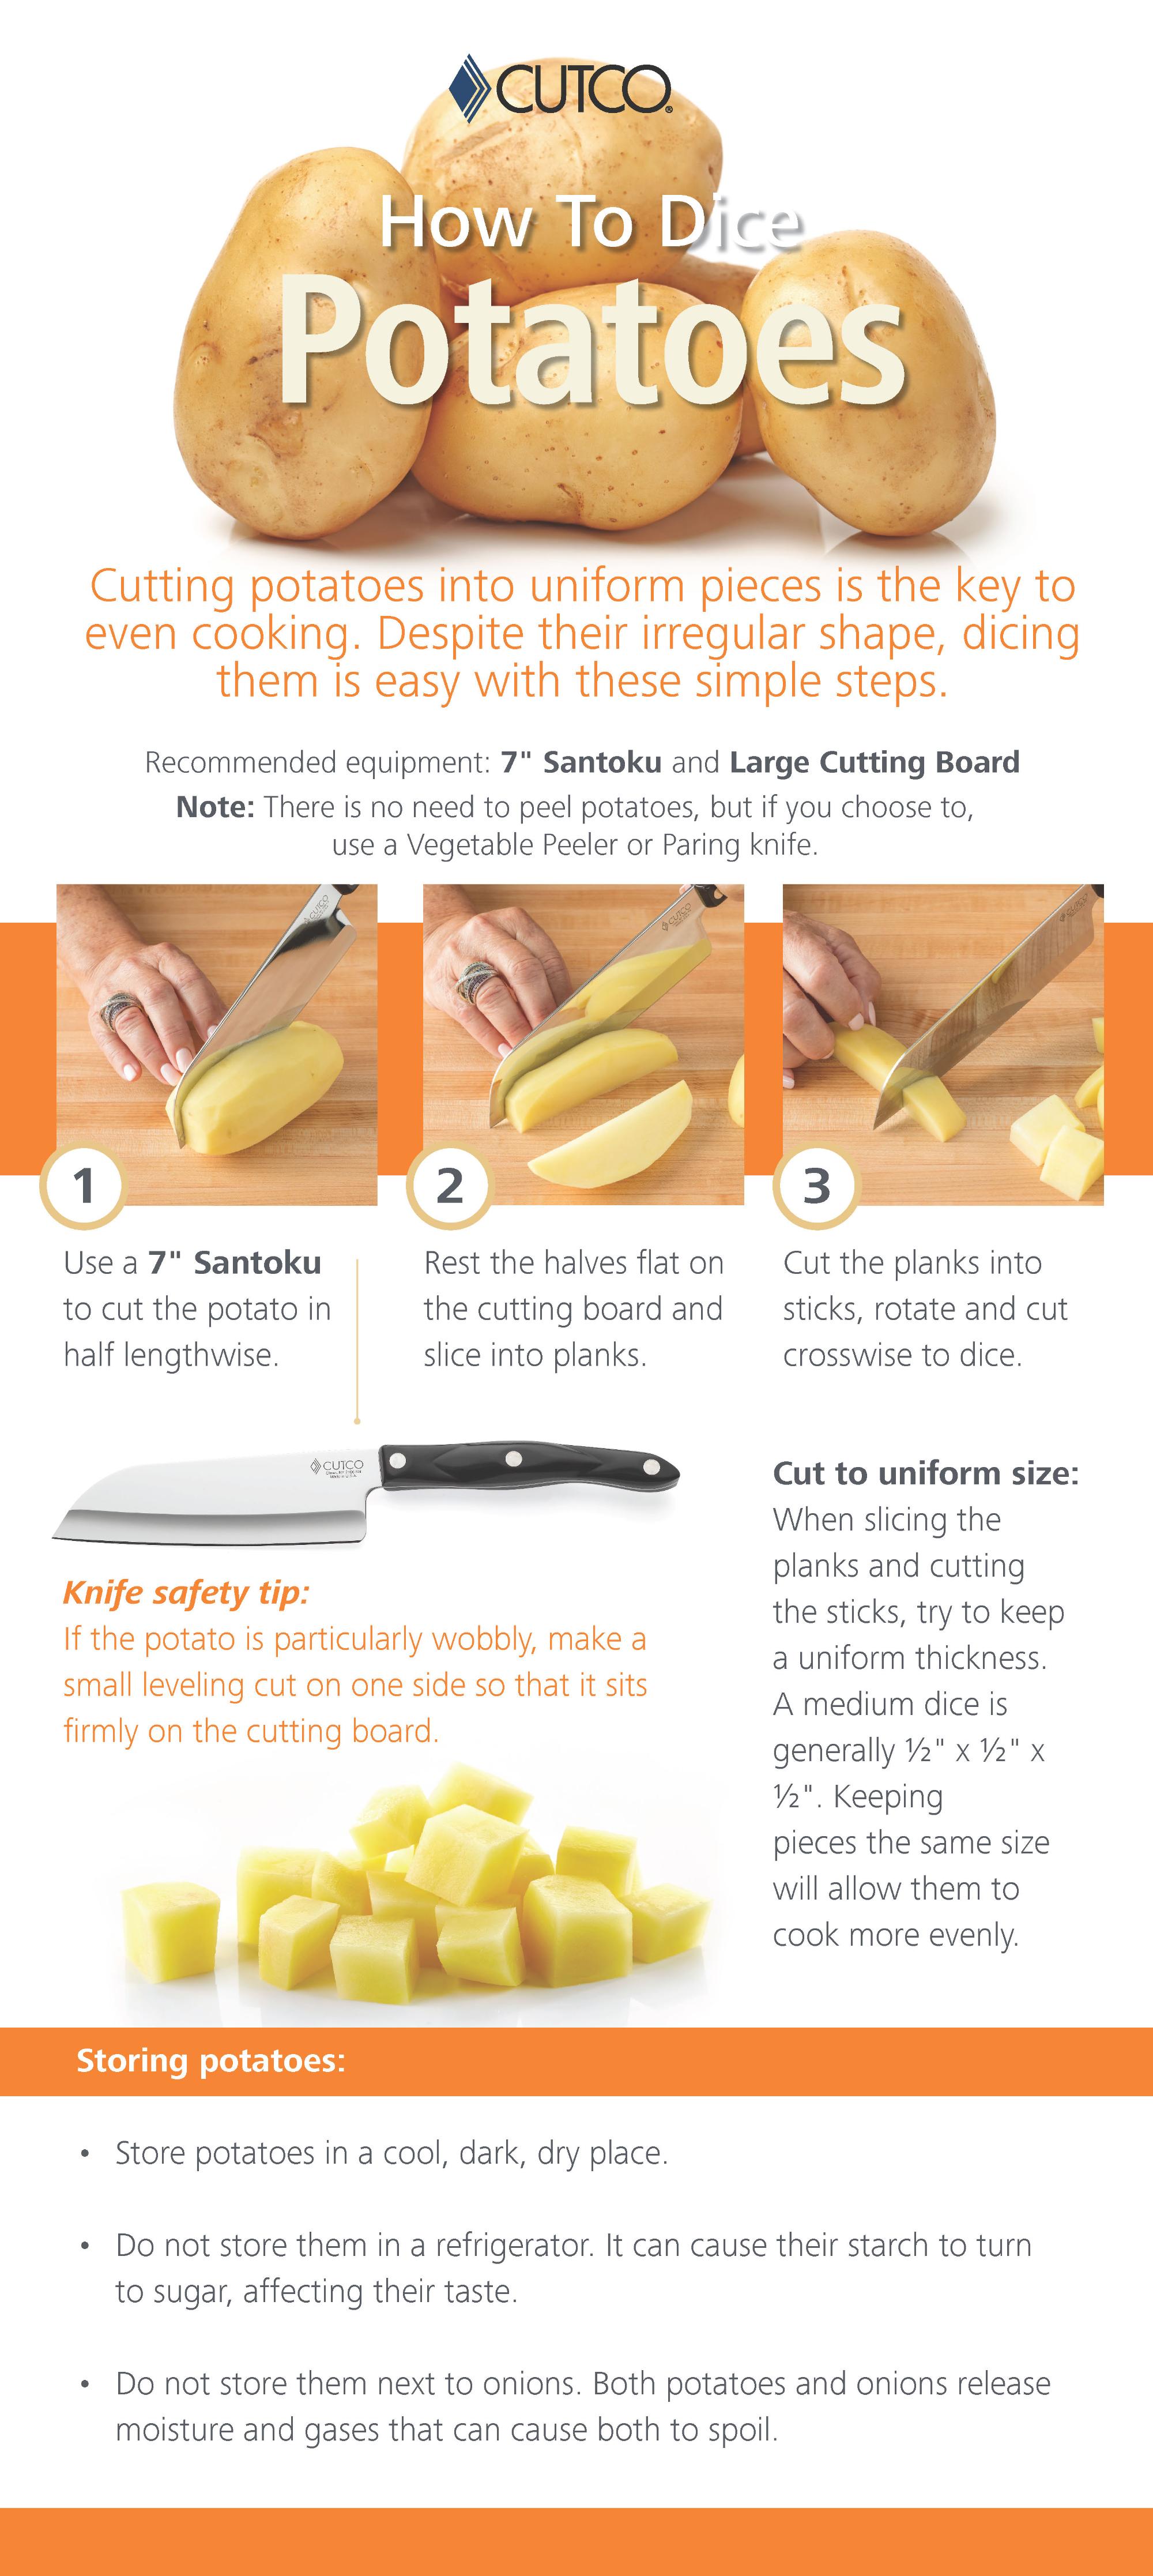 https://images.cutco.com/learn/2019/potatoes-infographic-l.jpg